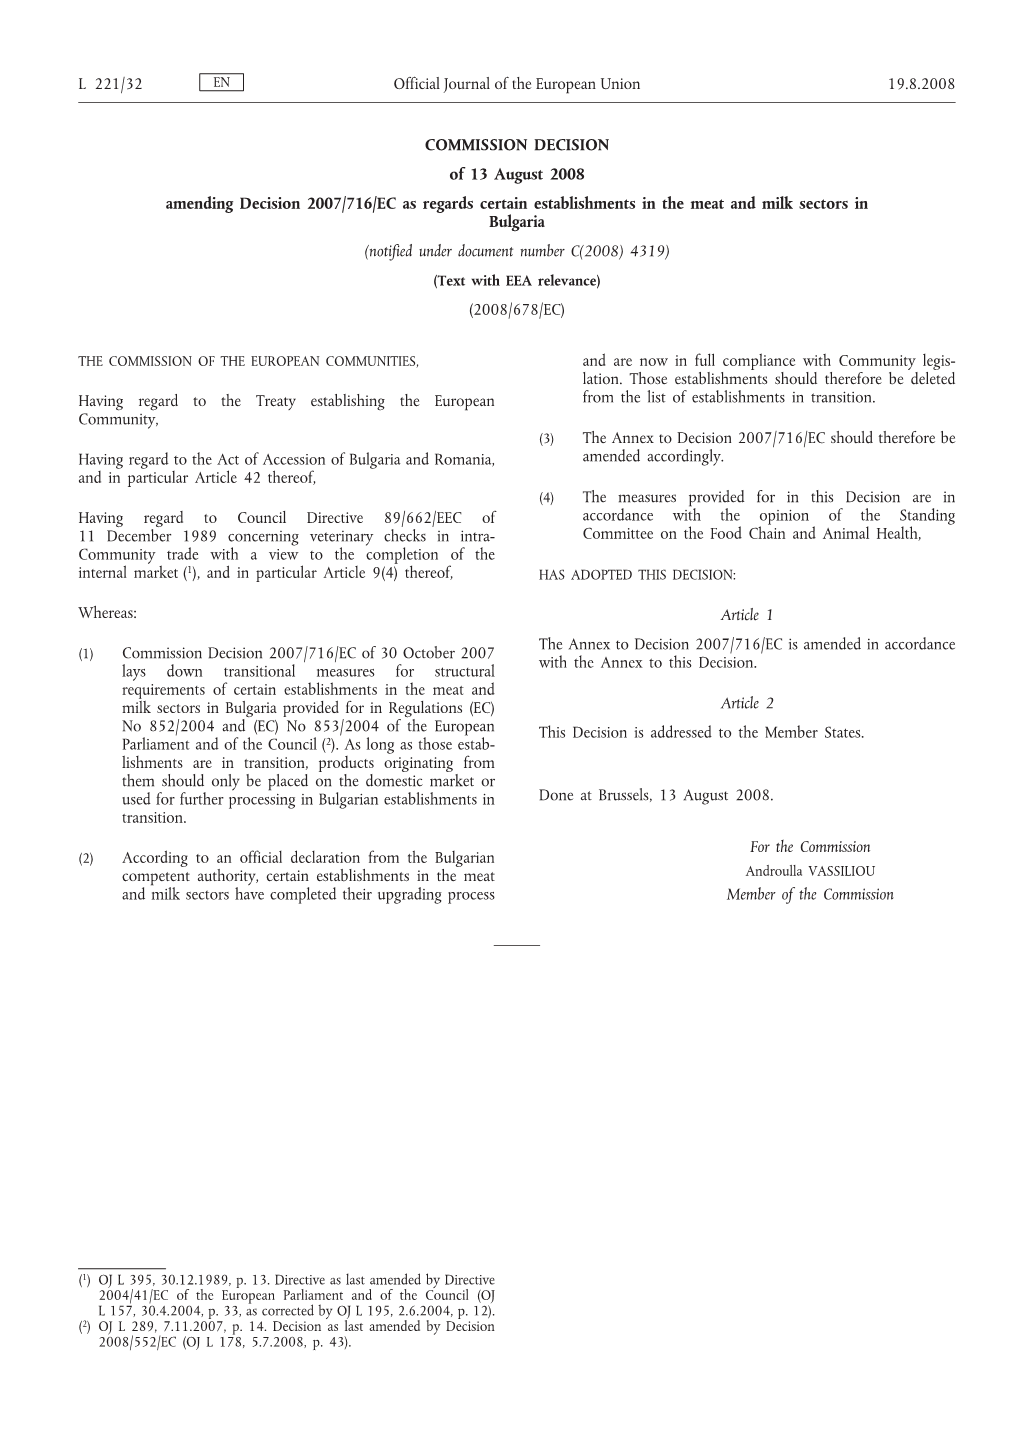 COMMISSION DECISION of 13 August 2008 Amending Decision